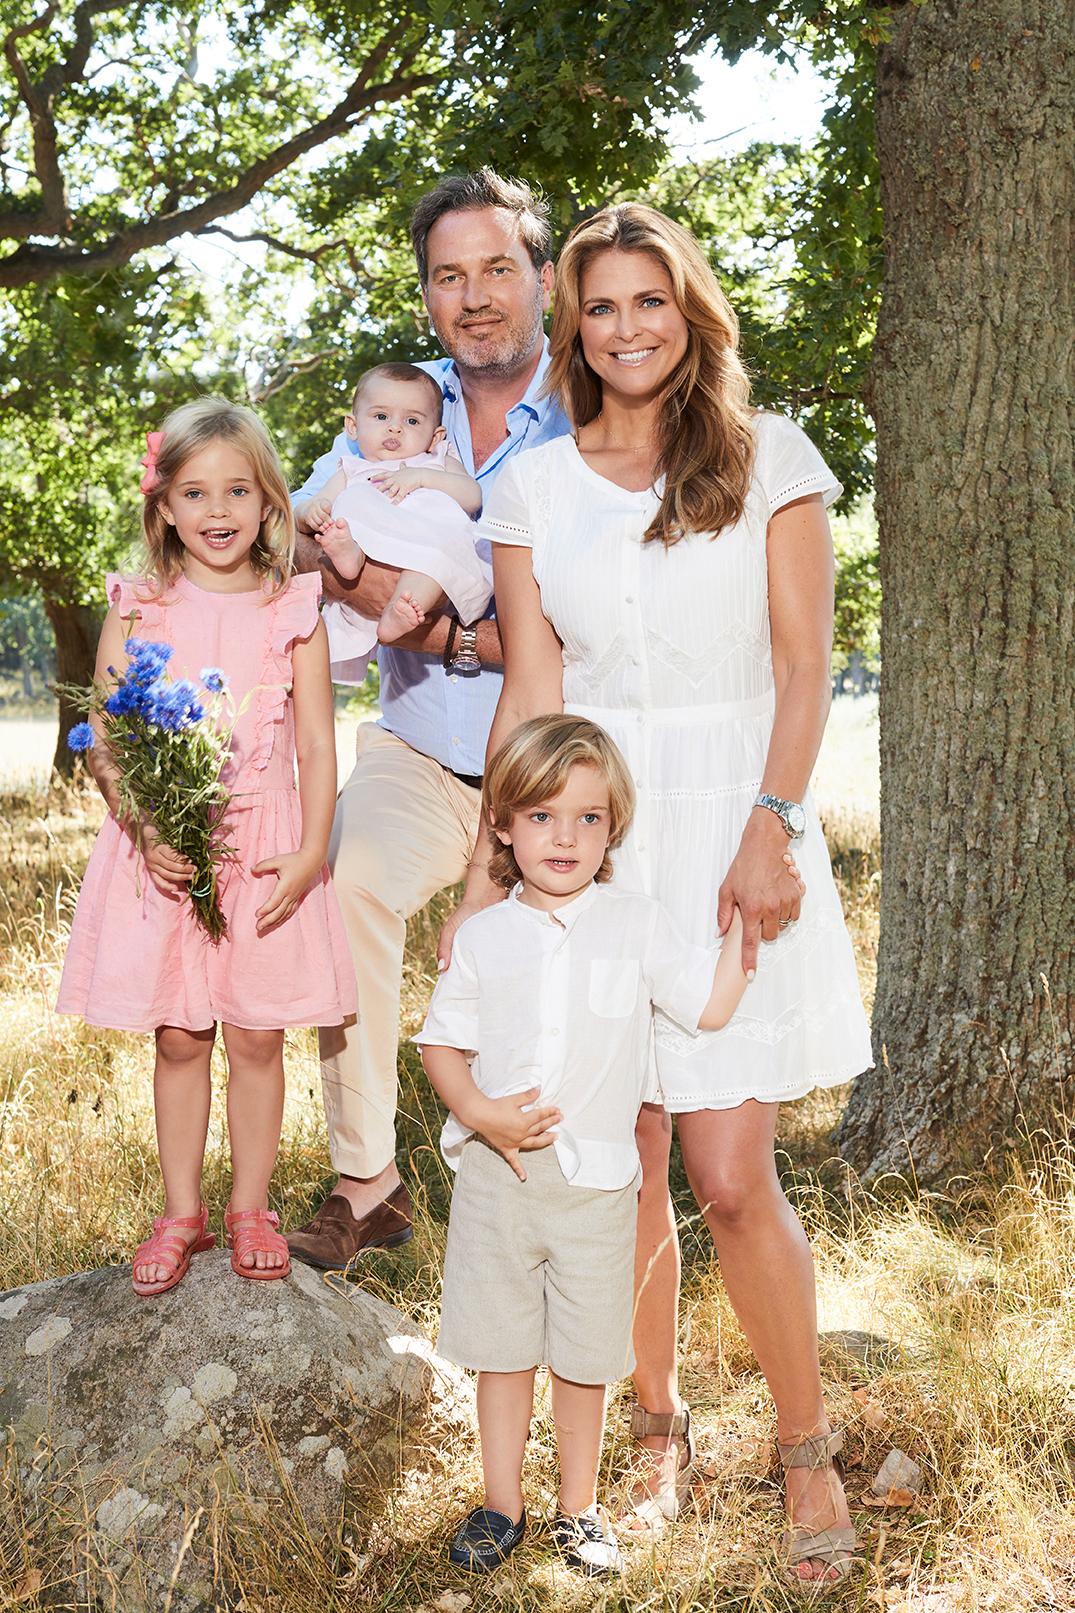 Prinsessan Madeleine med maken Christopher O’Neill och barnen: prinsessan Leonore, prinsessan Adrienne och prins Nicolas.